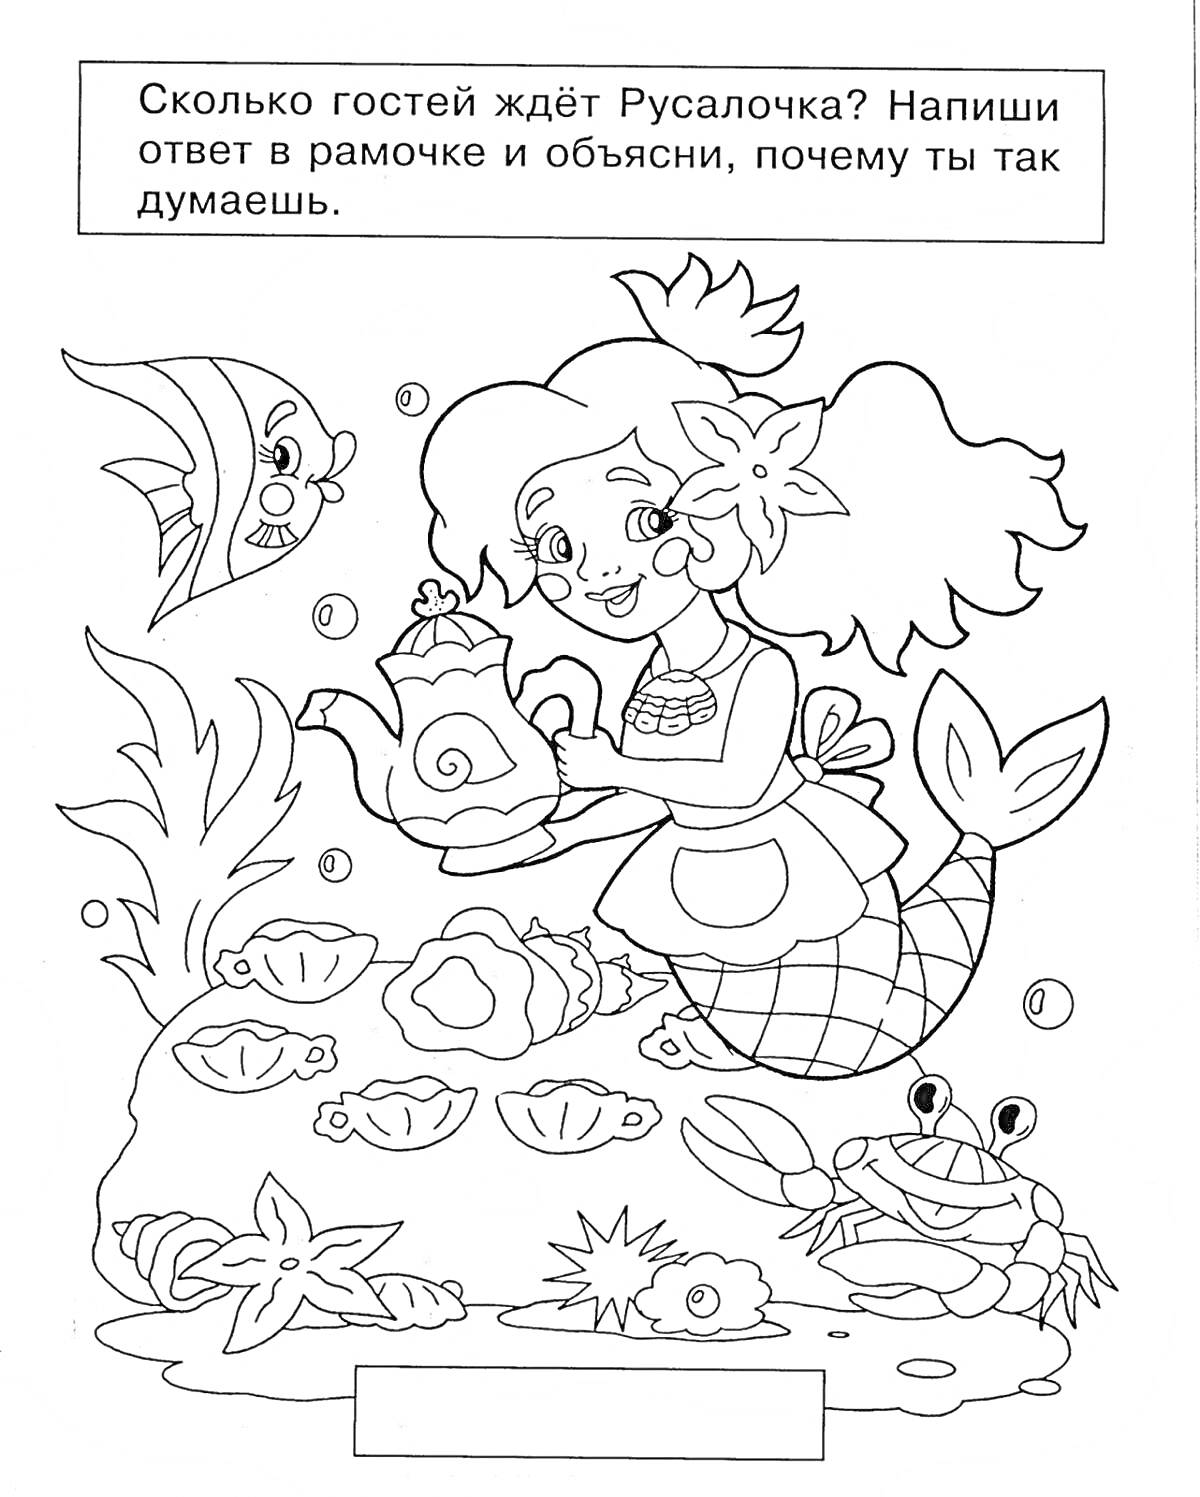 РаскраскаРусалочка с морскими гостями: крабом, рыбами и ракушками